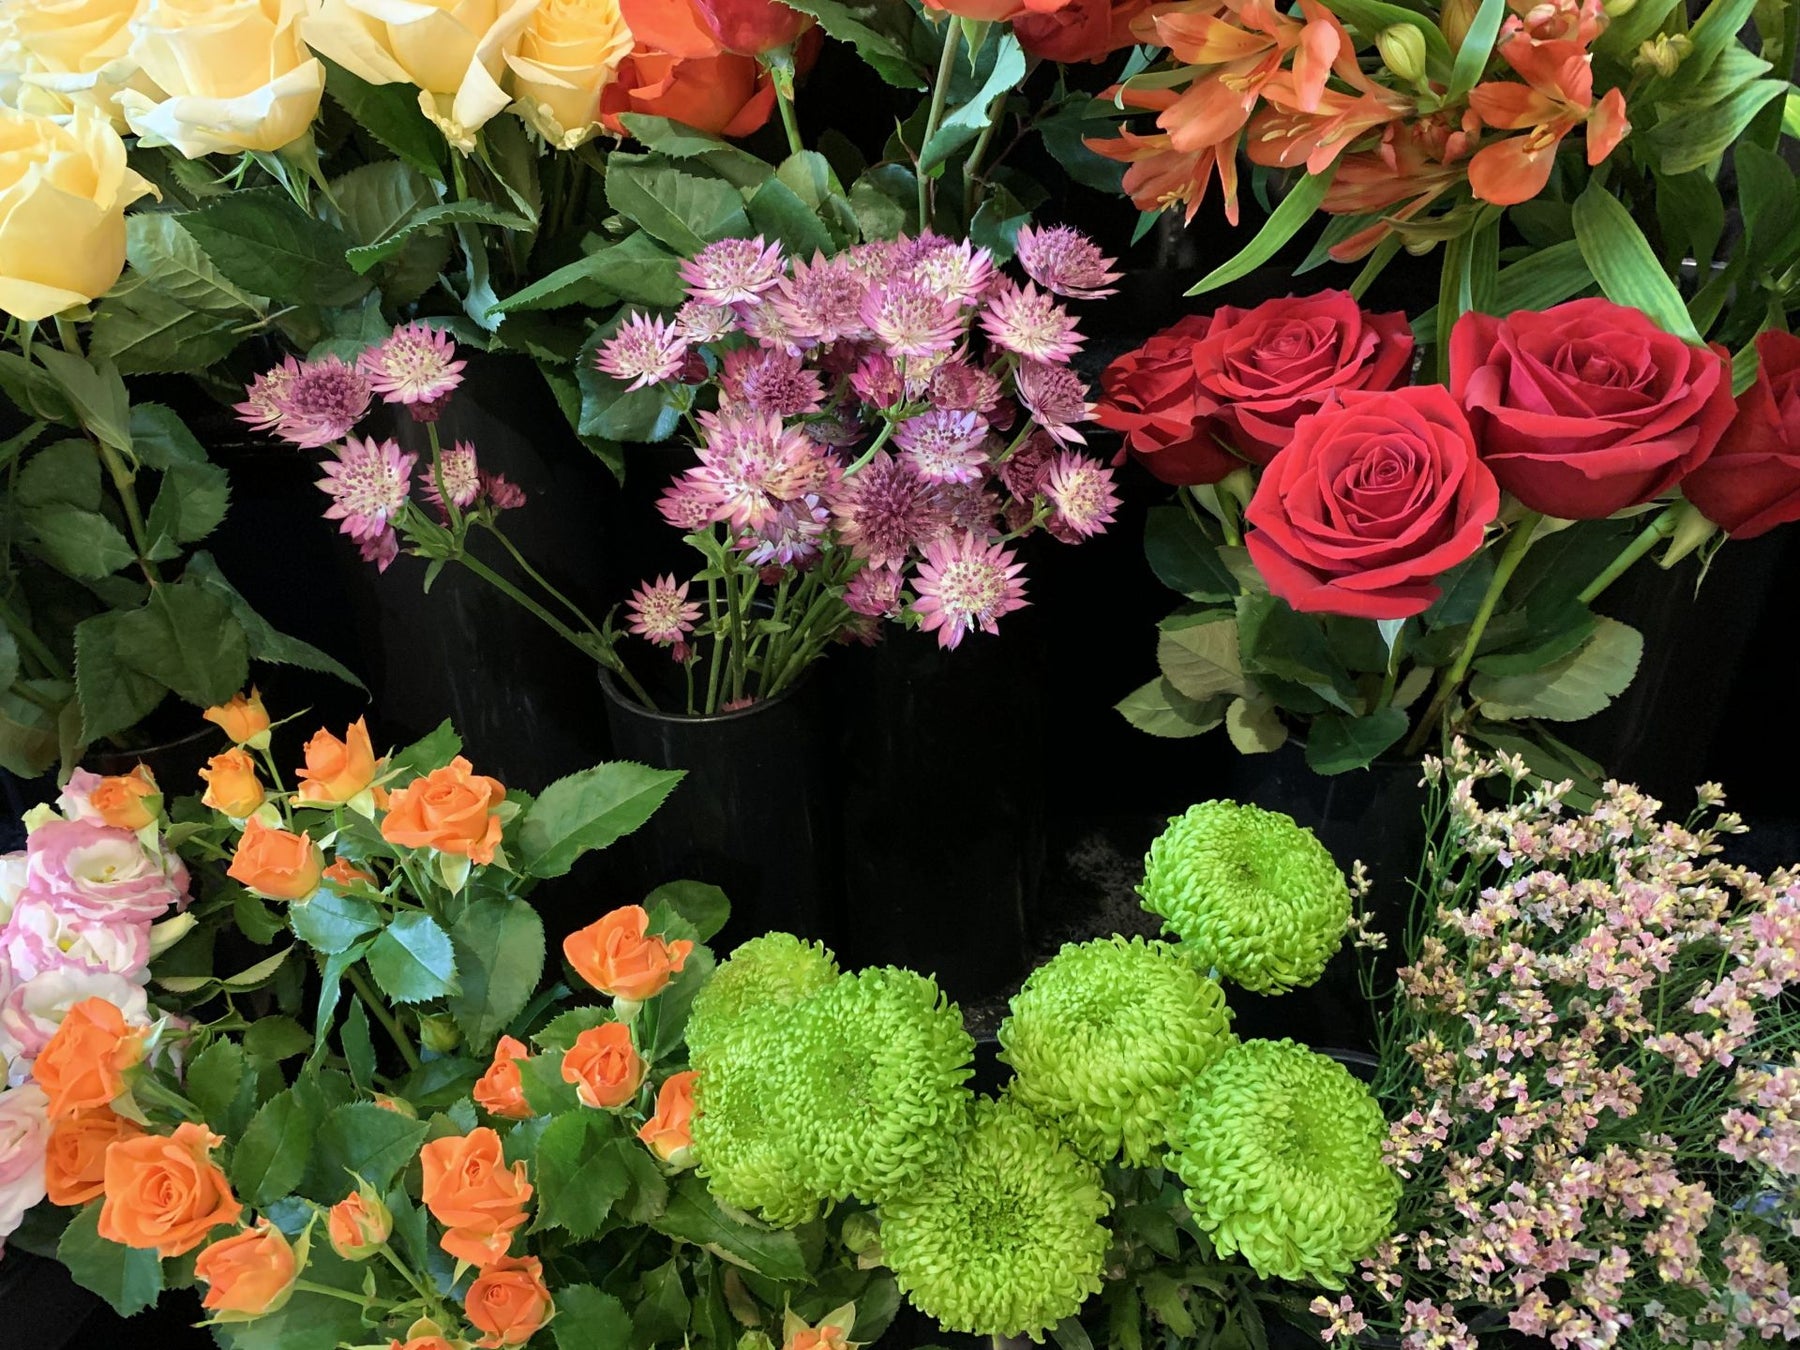 Centretown Ottawa Flower Shop. Get Long-lasting Flowers to Celebrate Any Occasion. Artist Flower Arrangements.